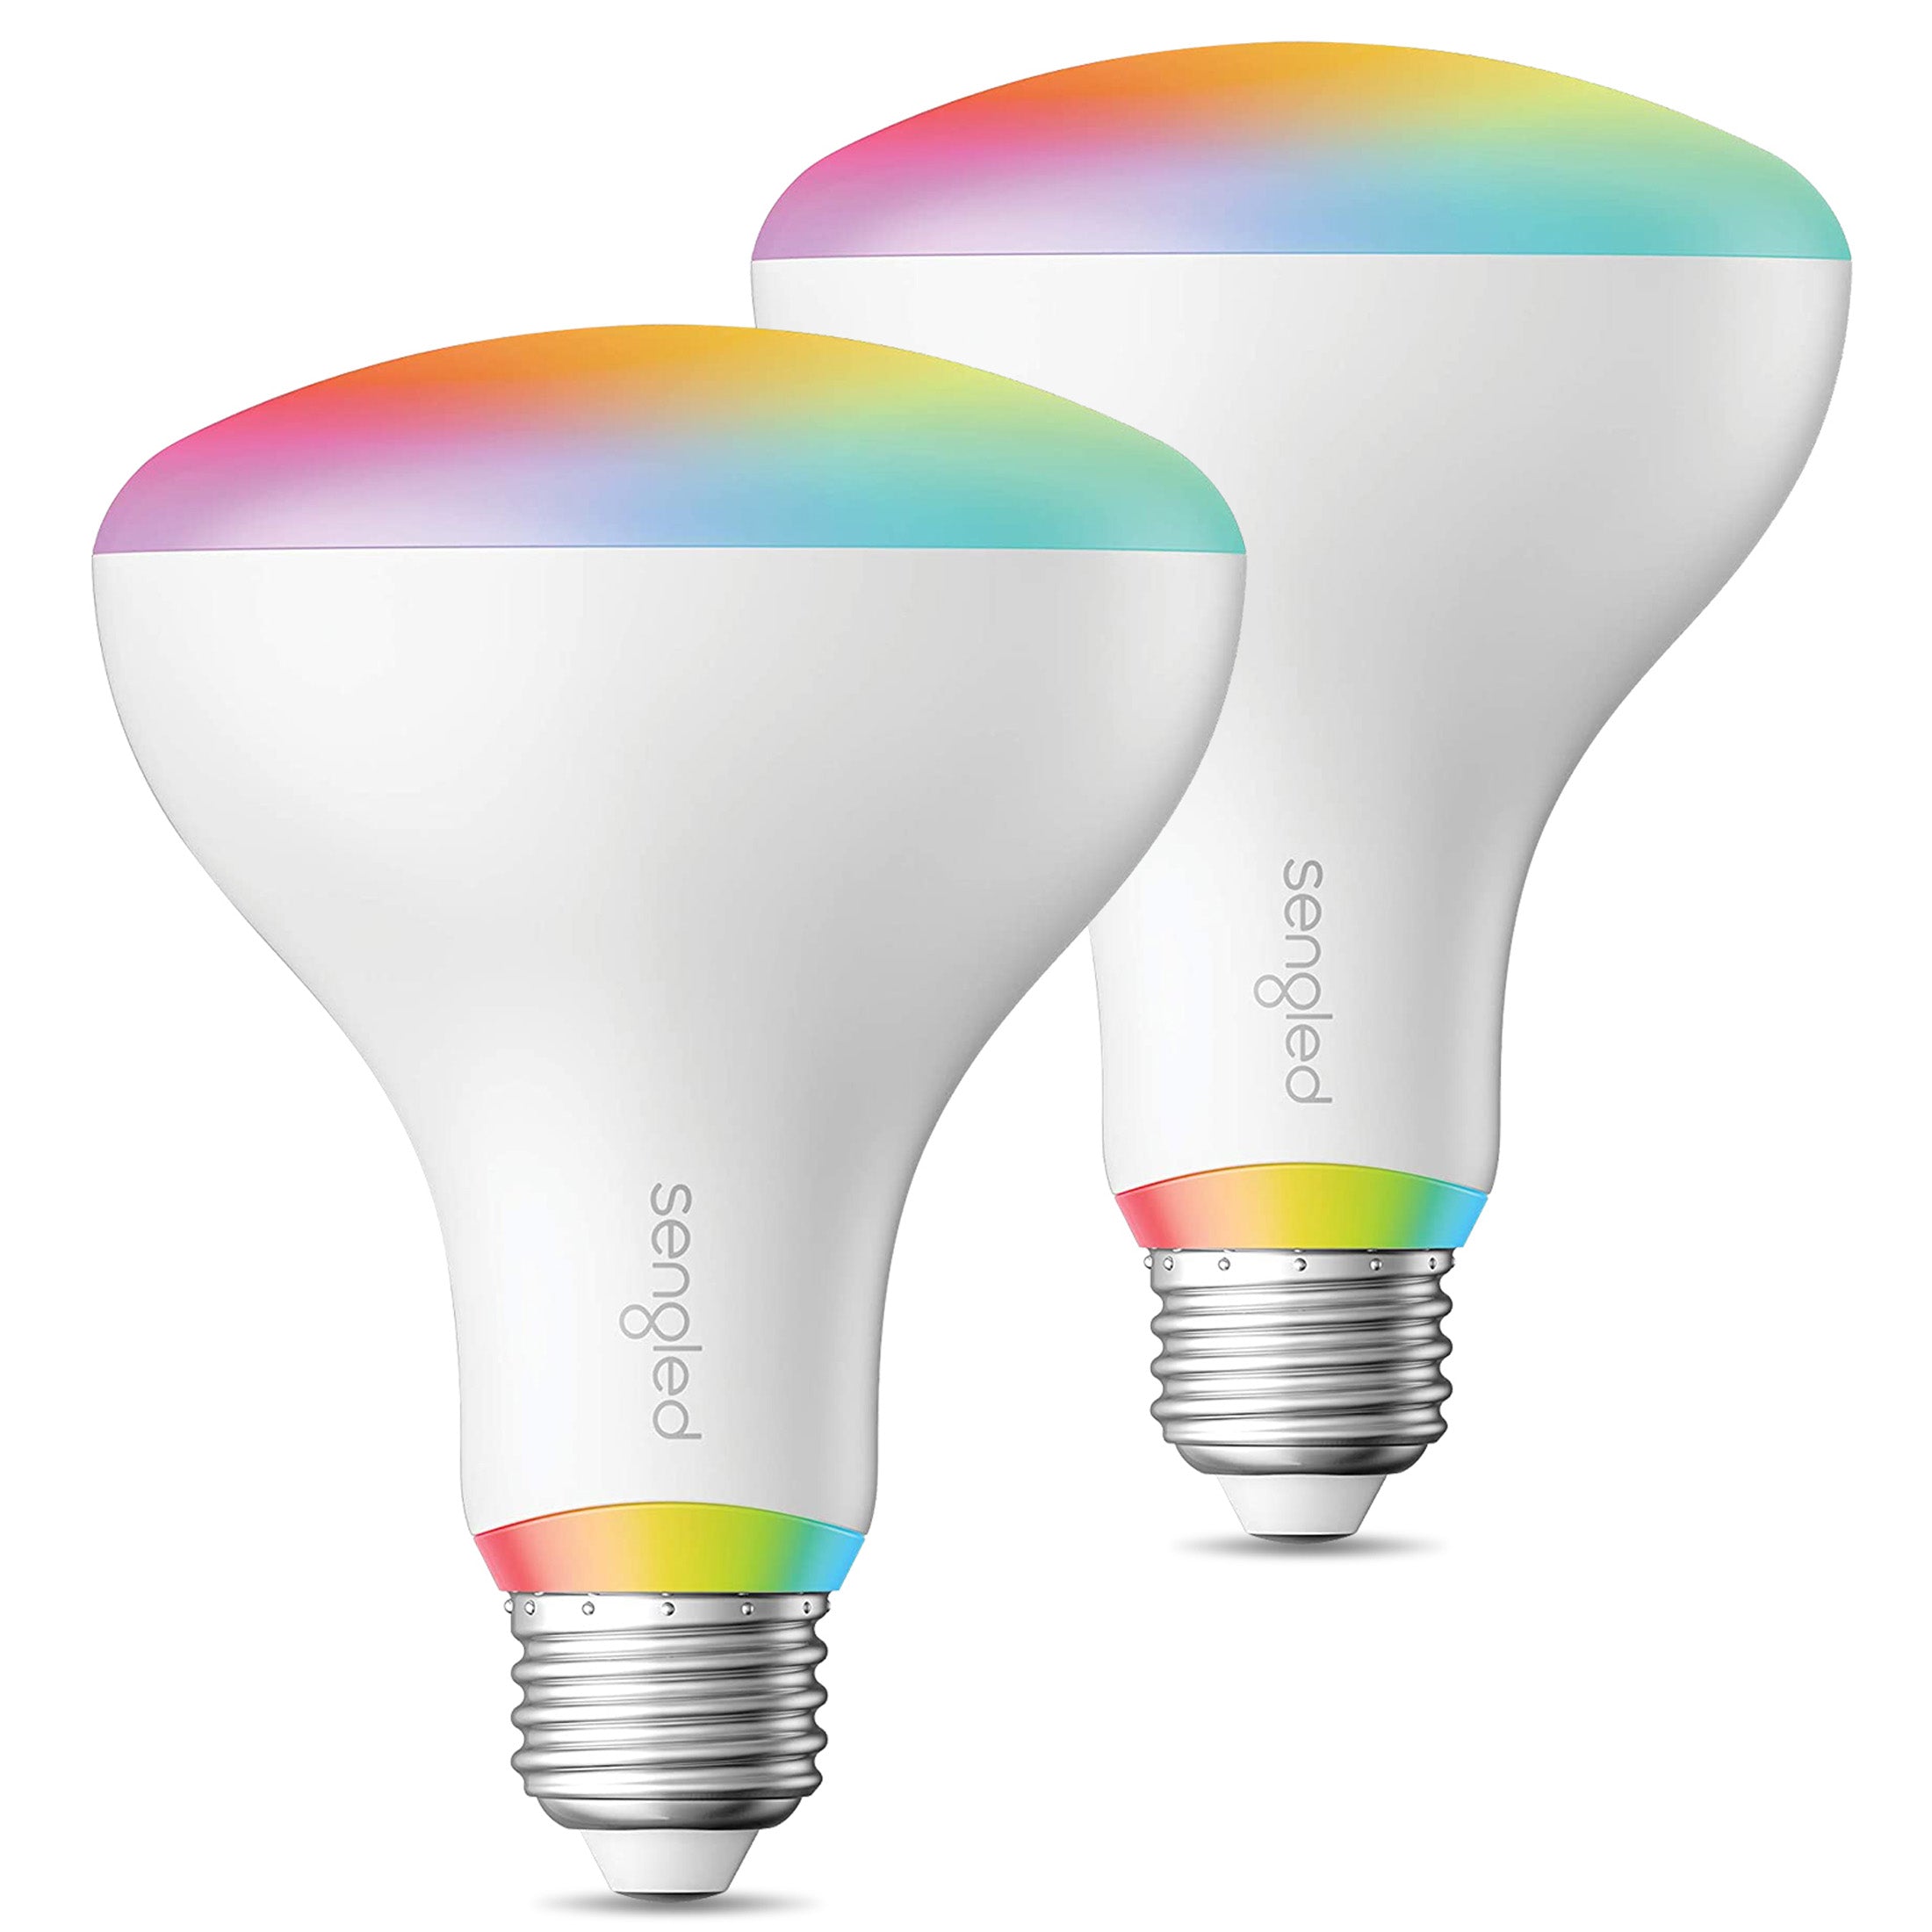 Sengled Zigbee Color BR30/E26 Bulbs: Smart Lighting for Any Space